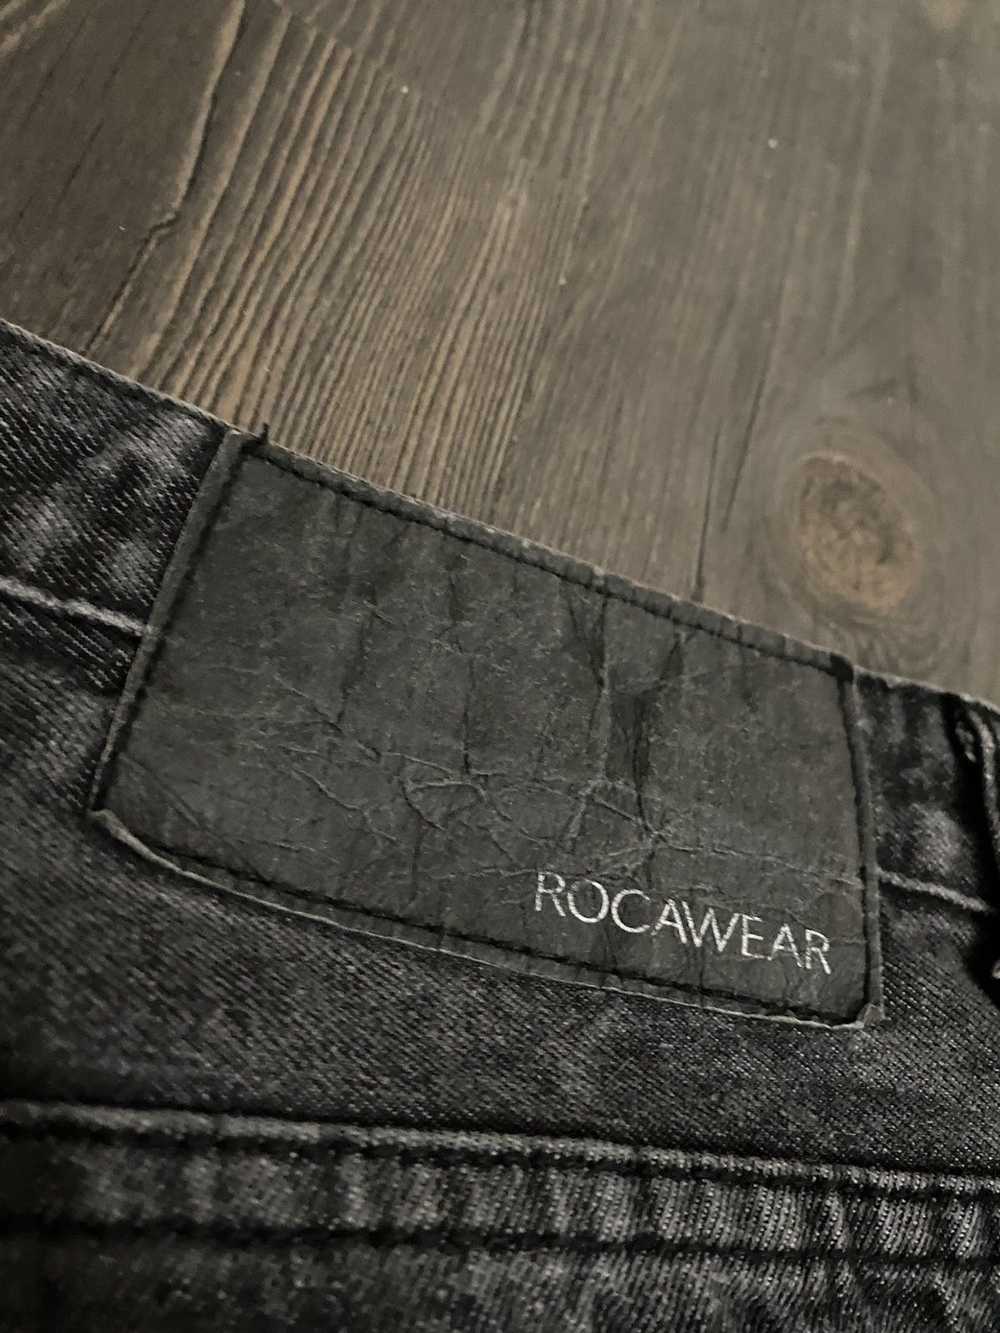 Rocawear Vintage Rocawear Jeans - image 5